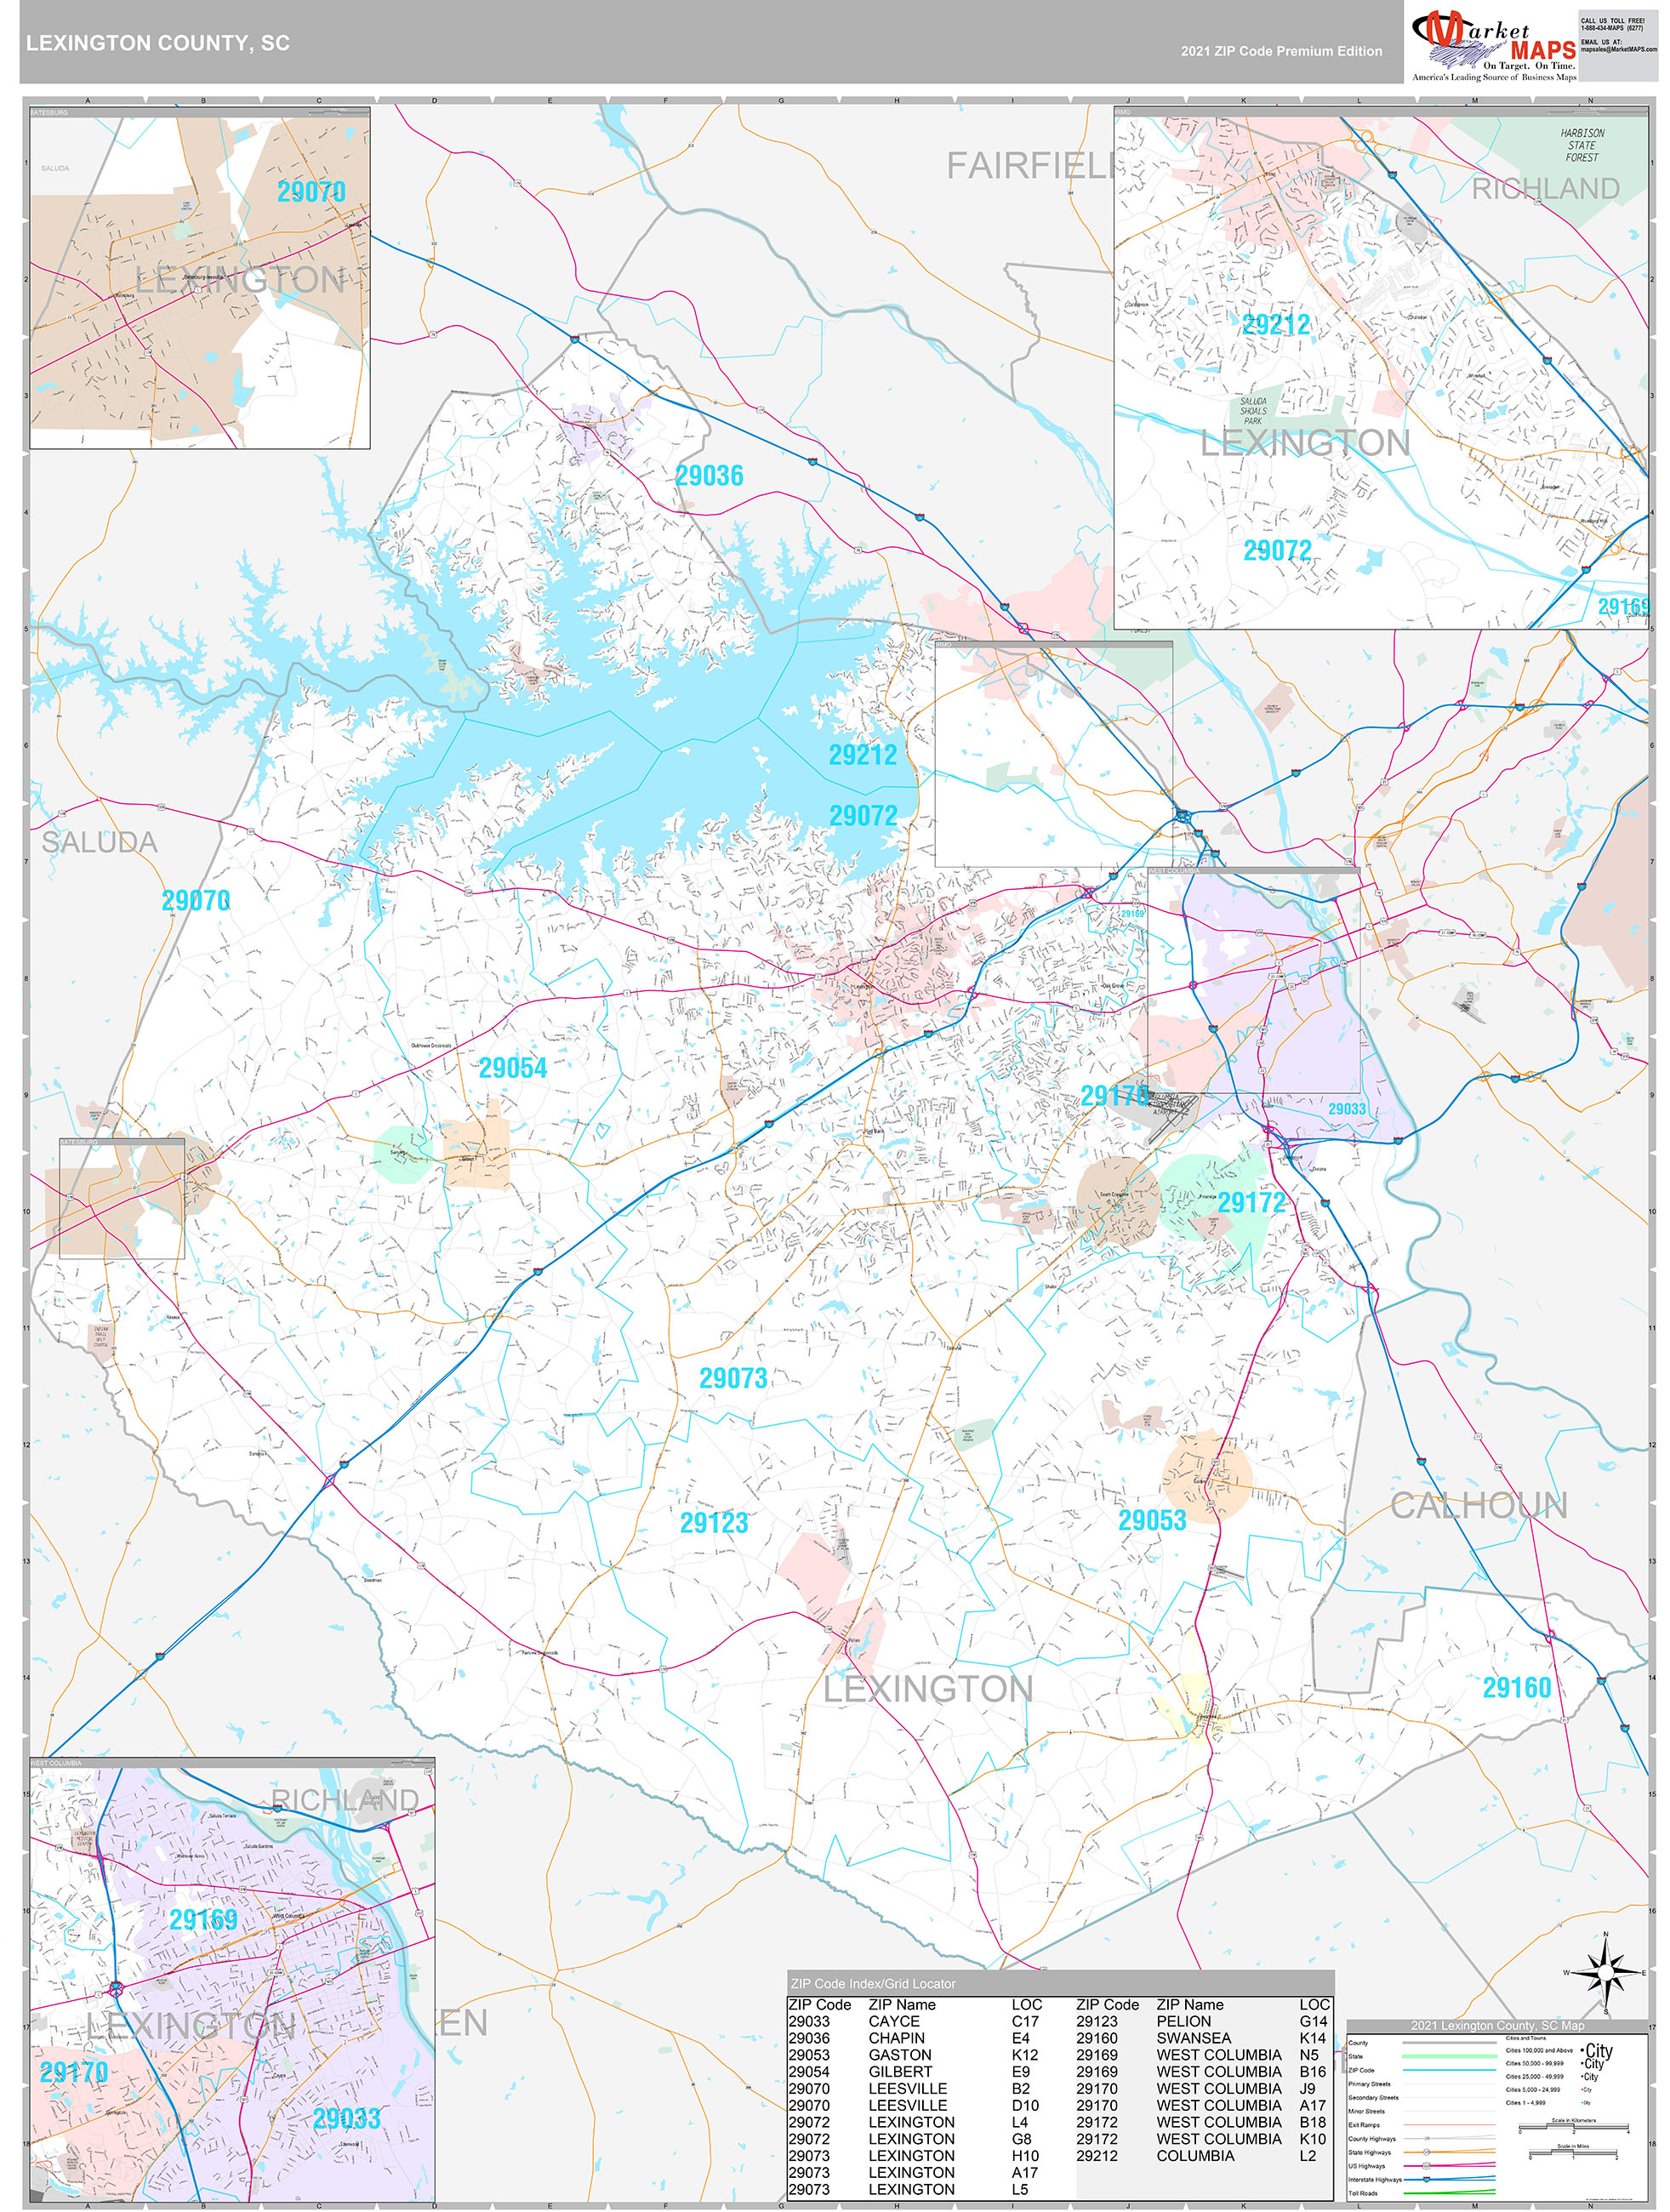 Lexington County, SC Wall Map Premium Style by MarketMAPS - MapSales